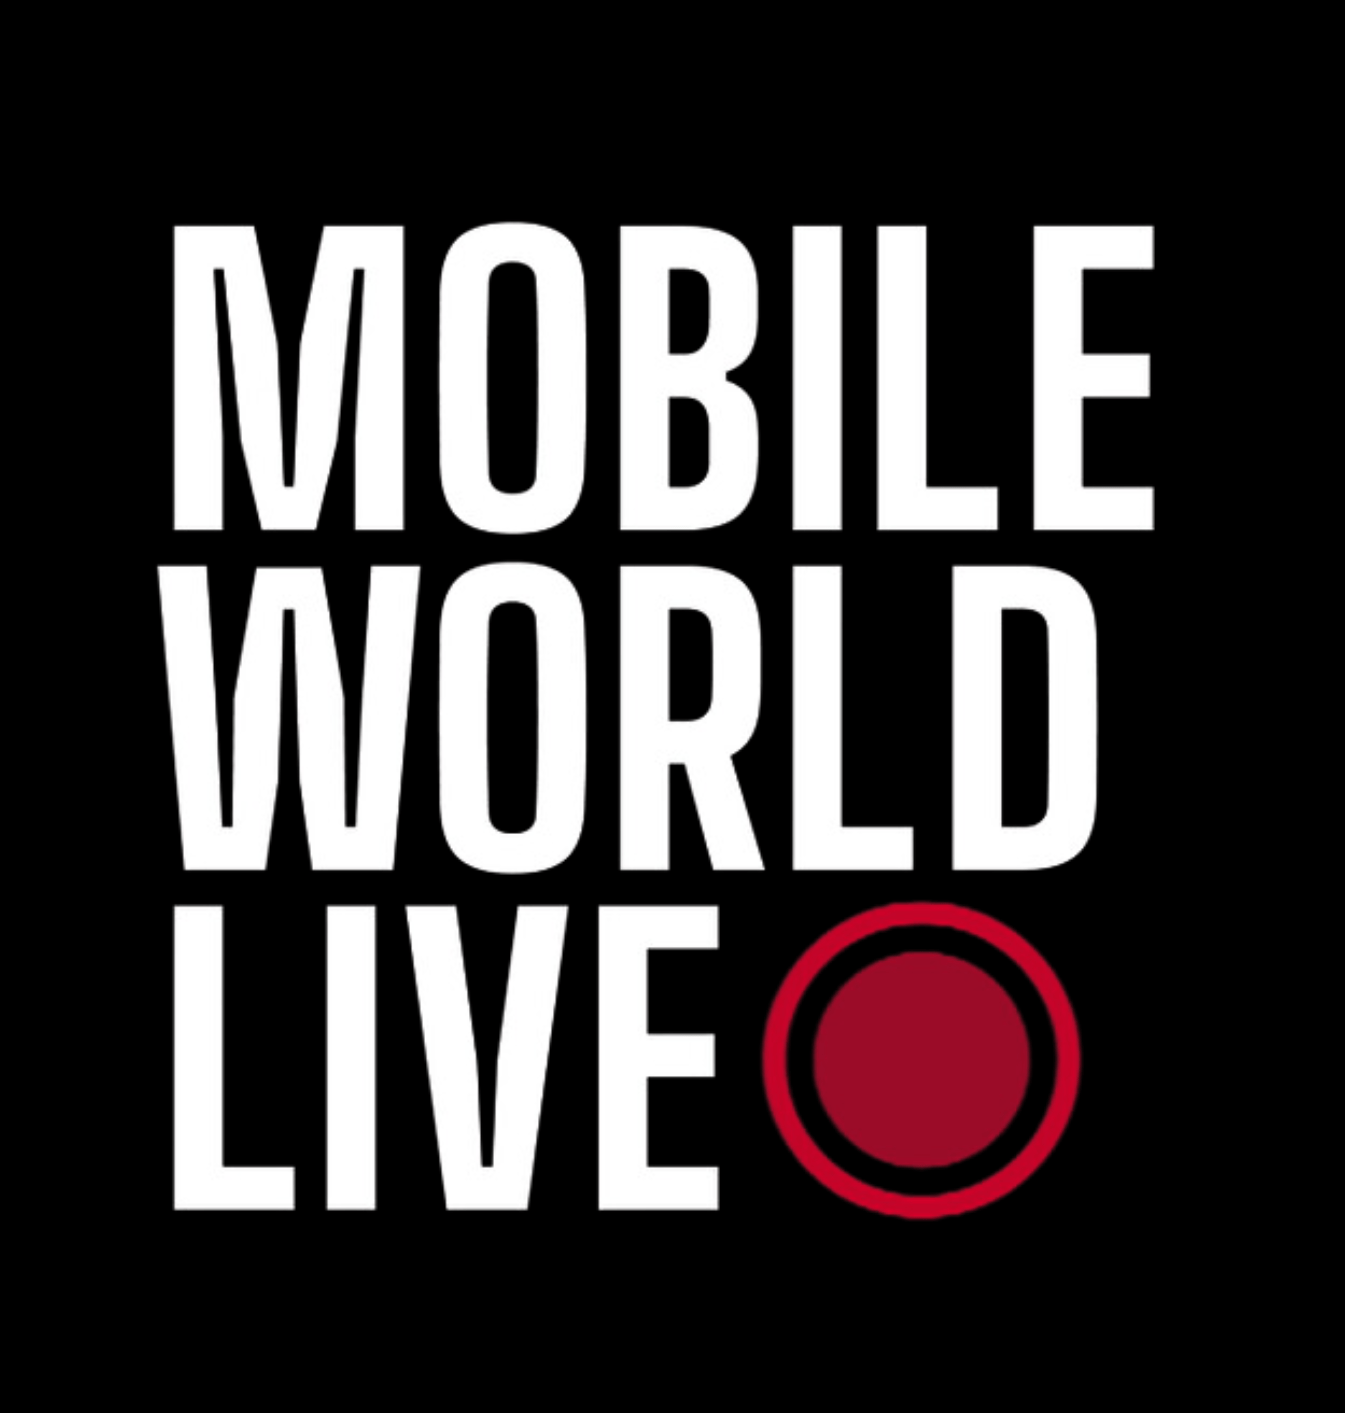 Mobile world Live logo